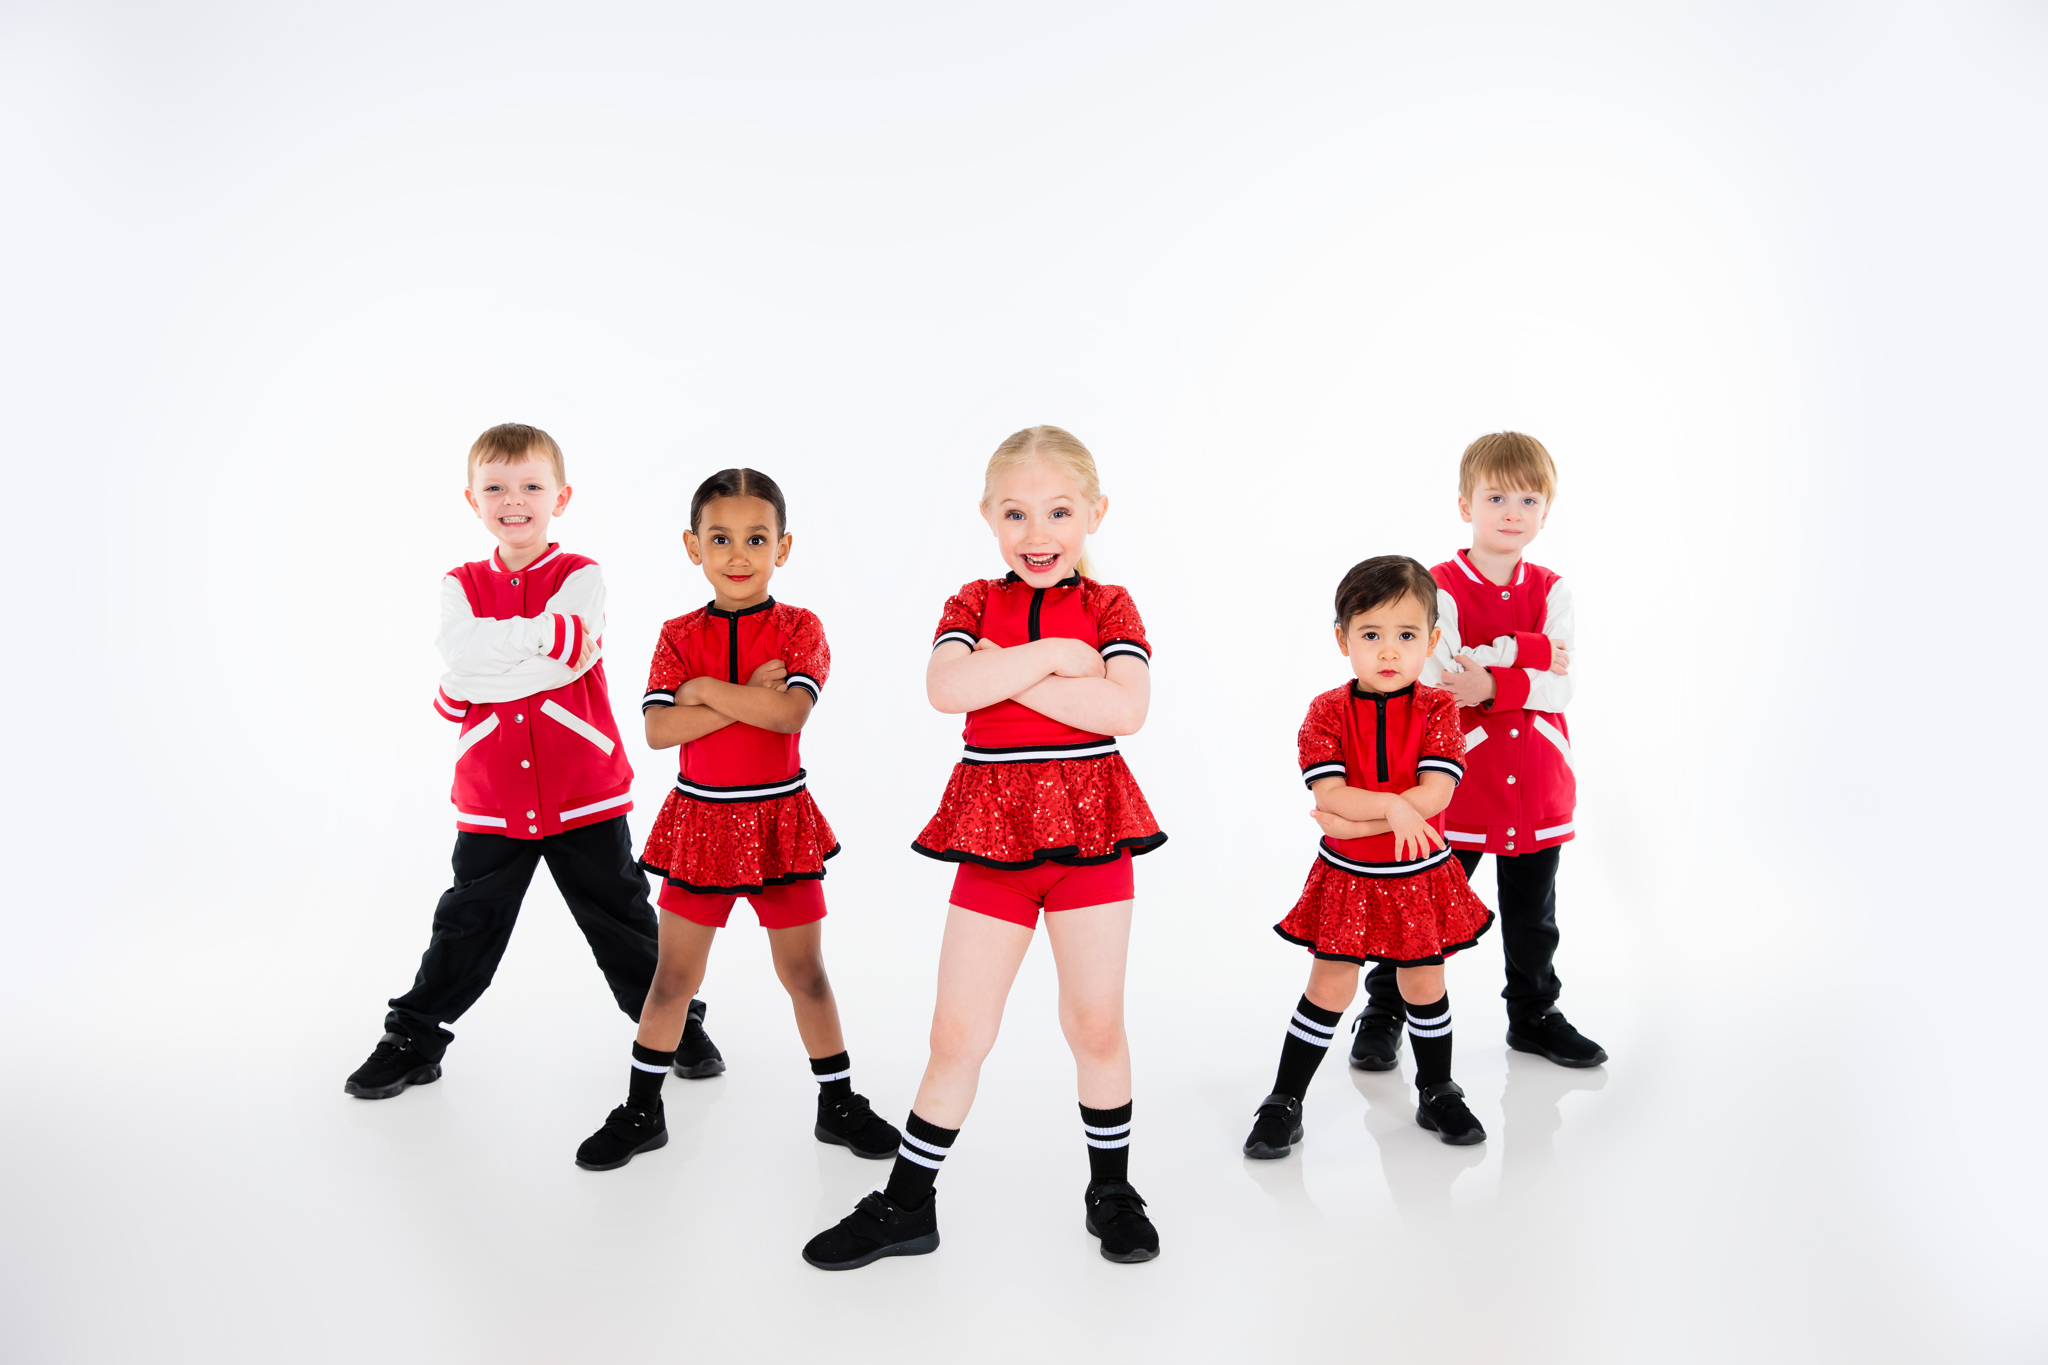 KMC Dance Preschool Dance classes